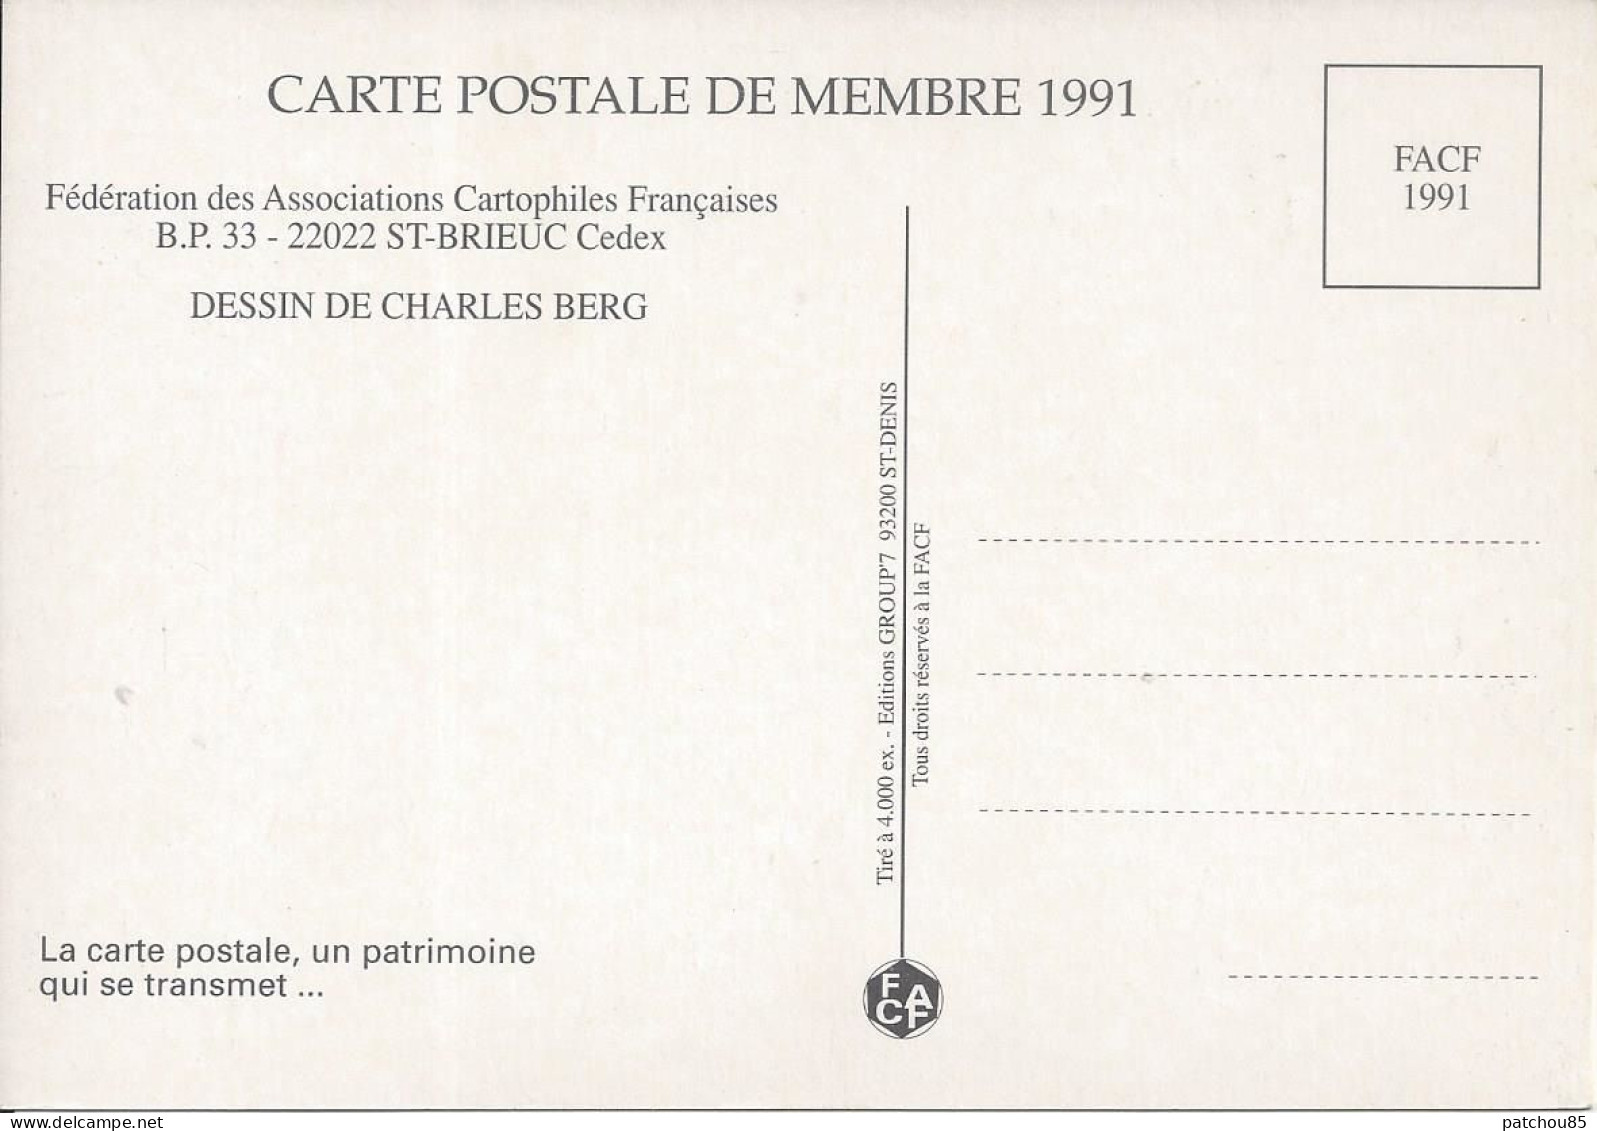 Carte Postale De Membre 1994 Saint Brieuc  Dessin De Charles Berg La Carte Postales, Un Patrimoine Qui Se Transmet - Borse E Saloni Del Collezionismo